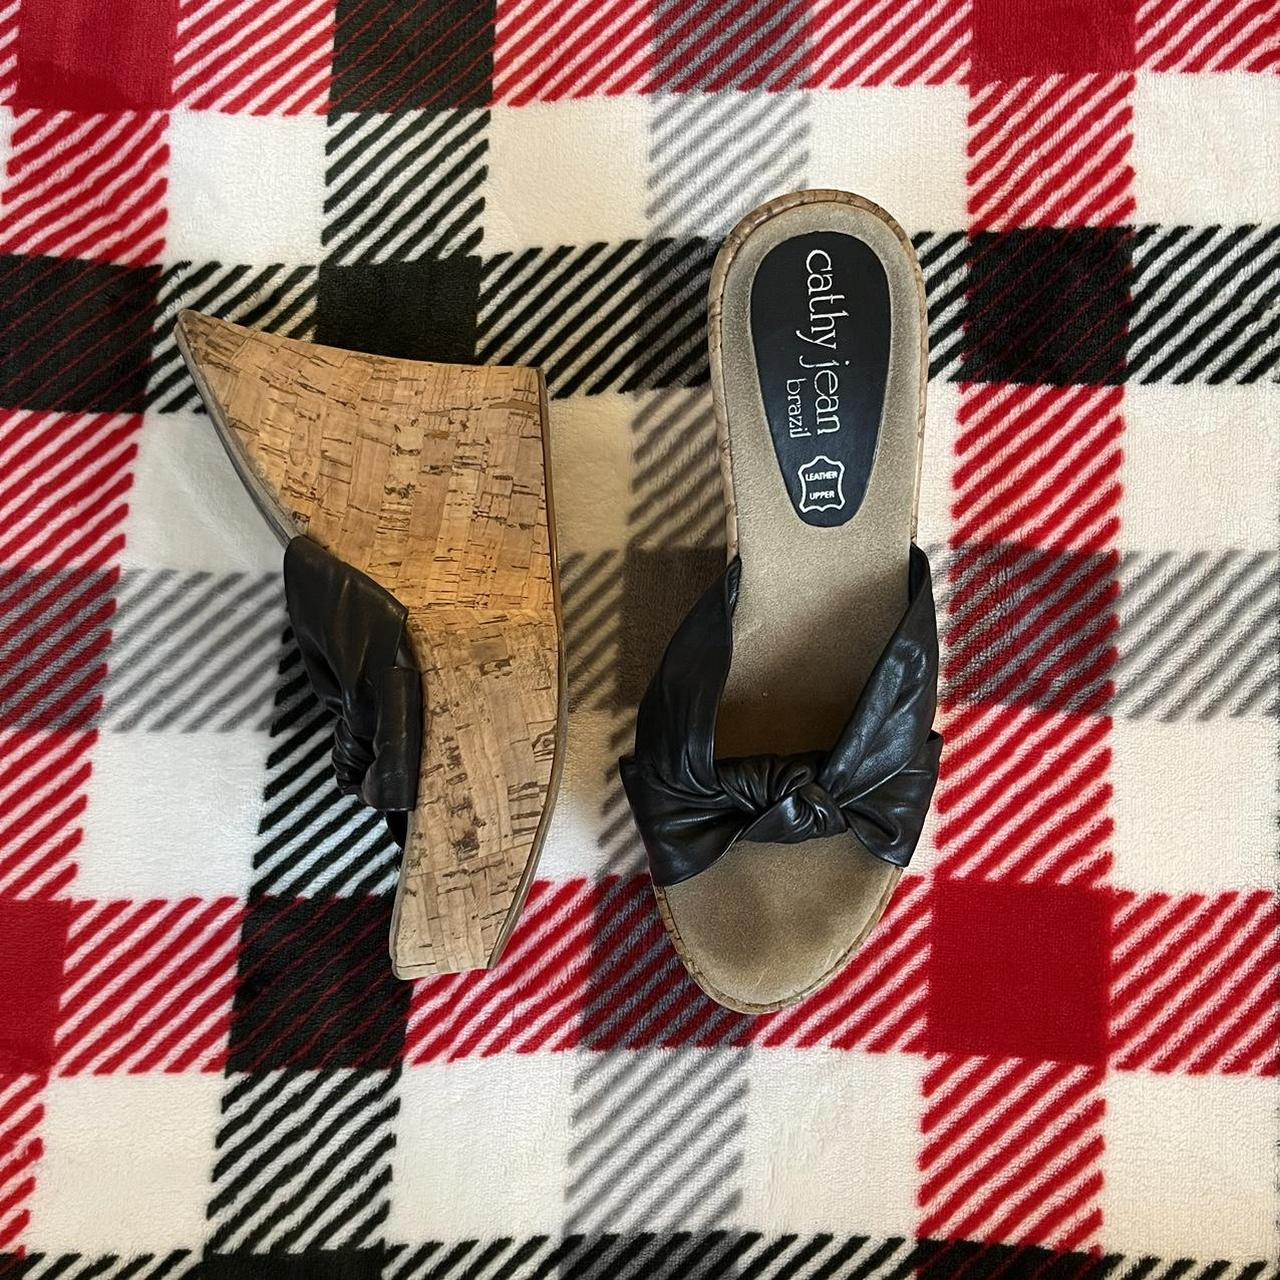 Cathy Jean Shoes - 2855 Stevens Creek Blvd #2565